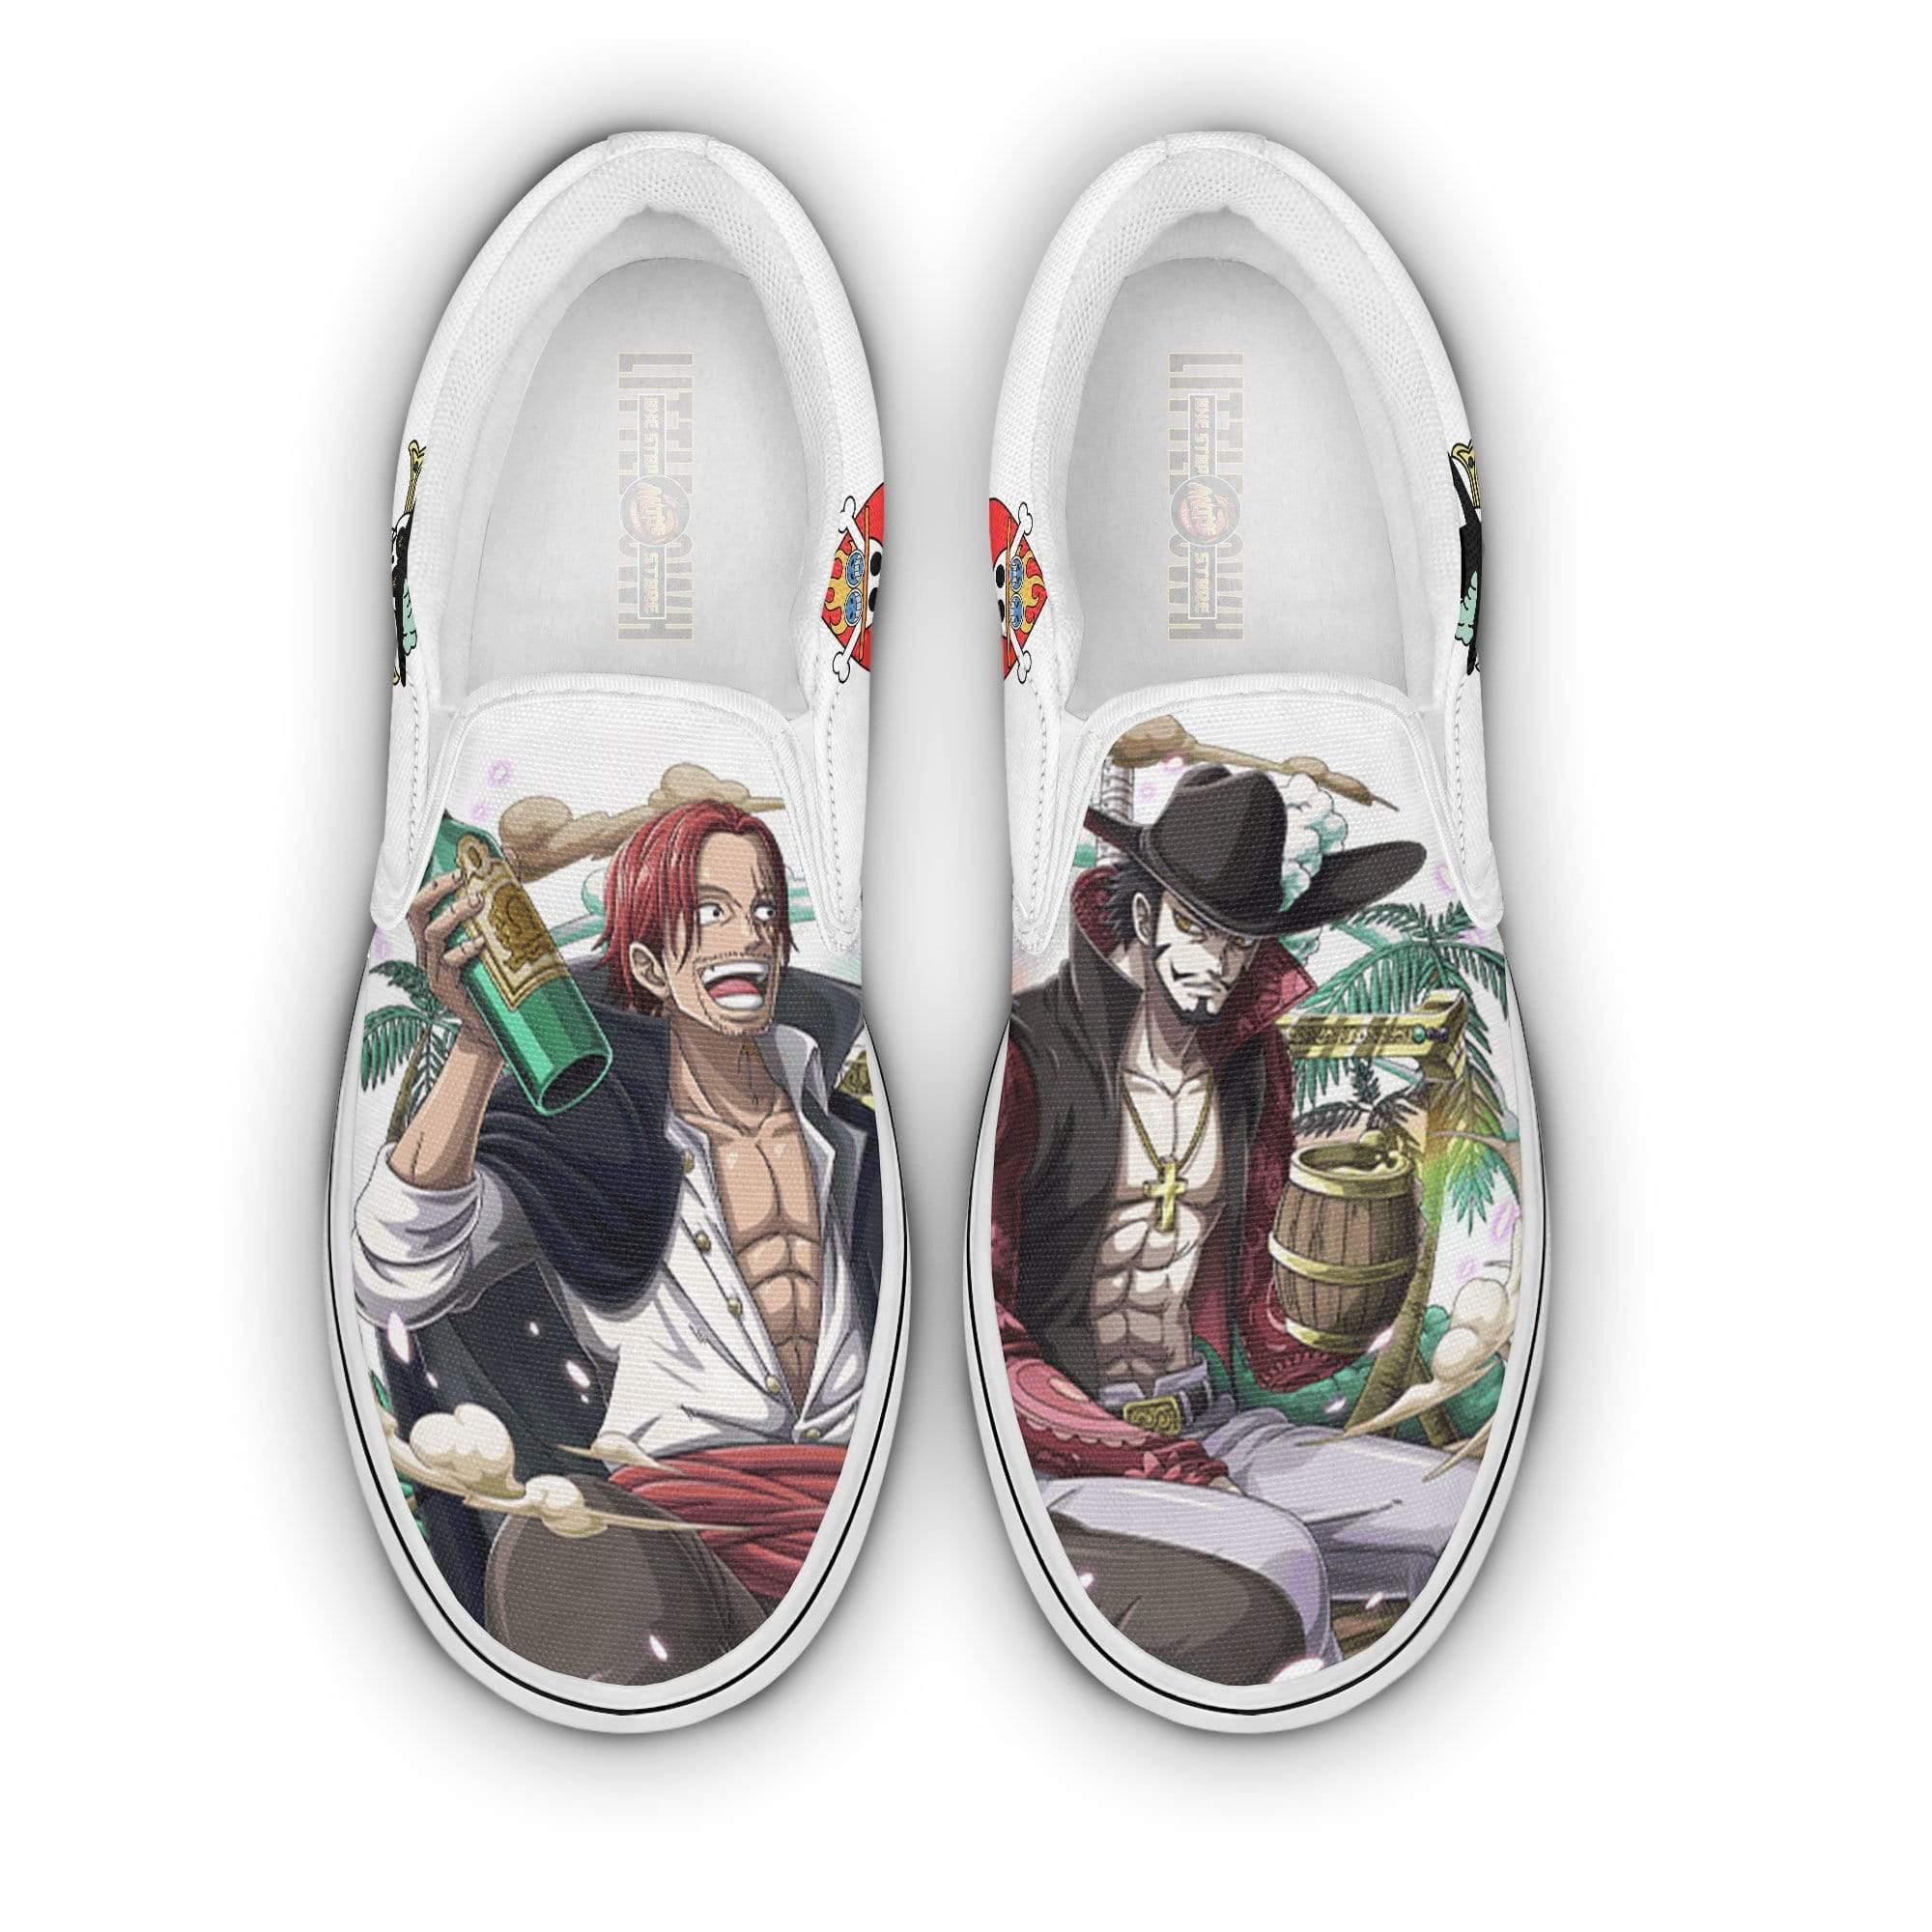 Dracule Mihawk x Shanks One Piece Shoes Custom Anime Flat Slip On Sneakers